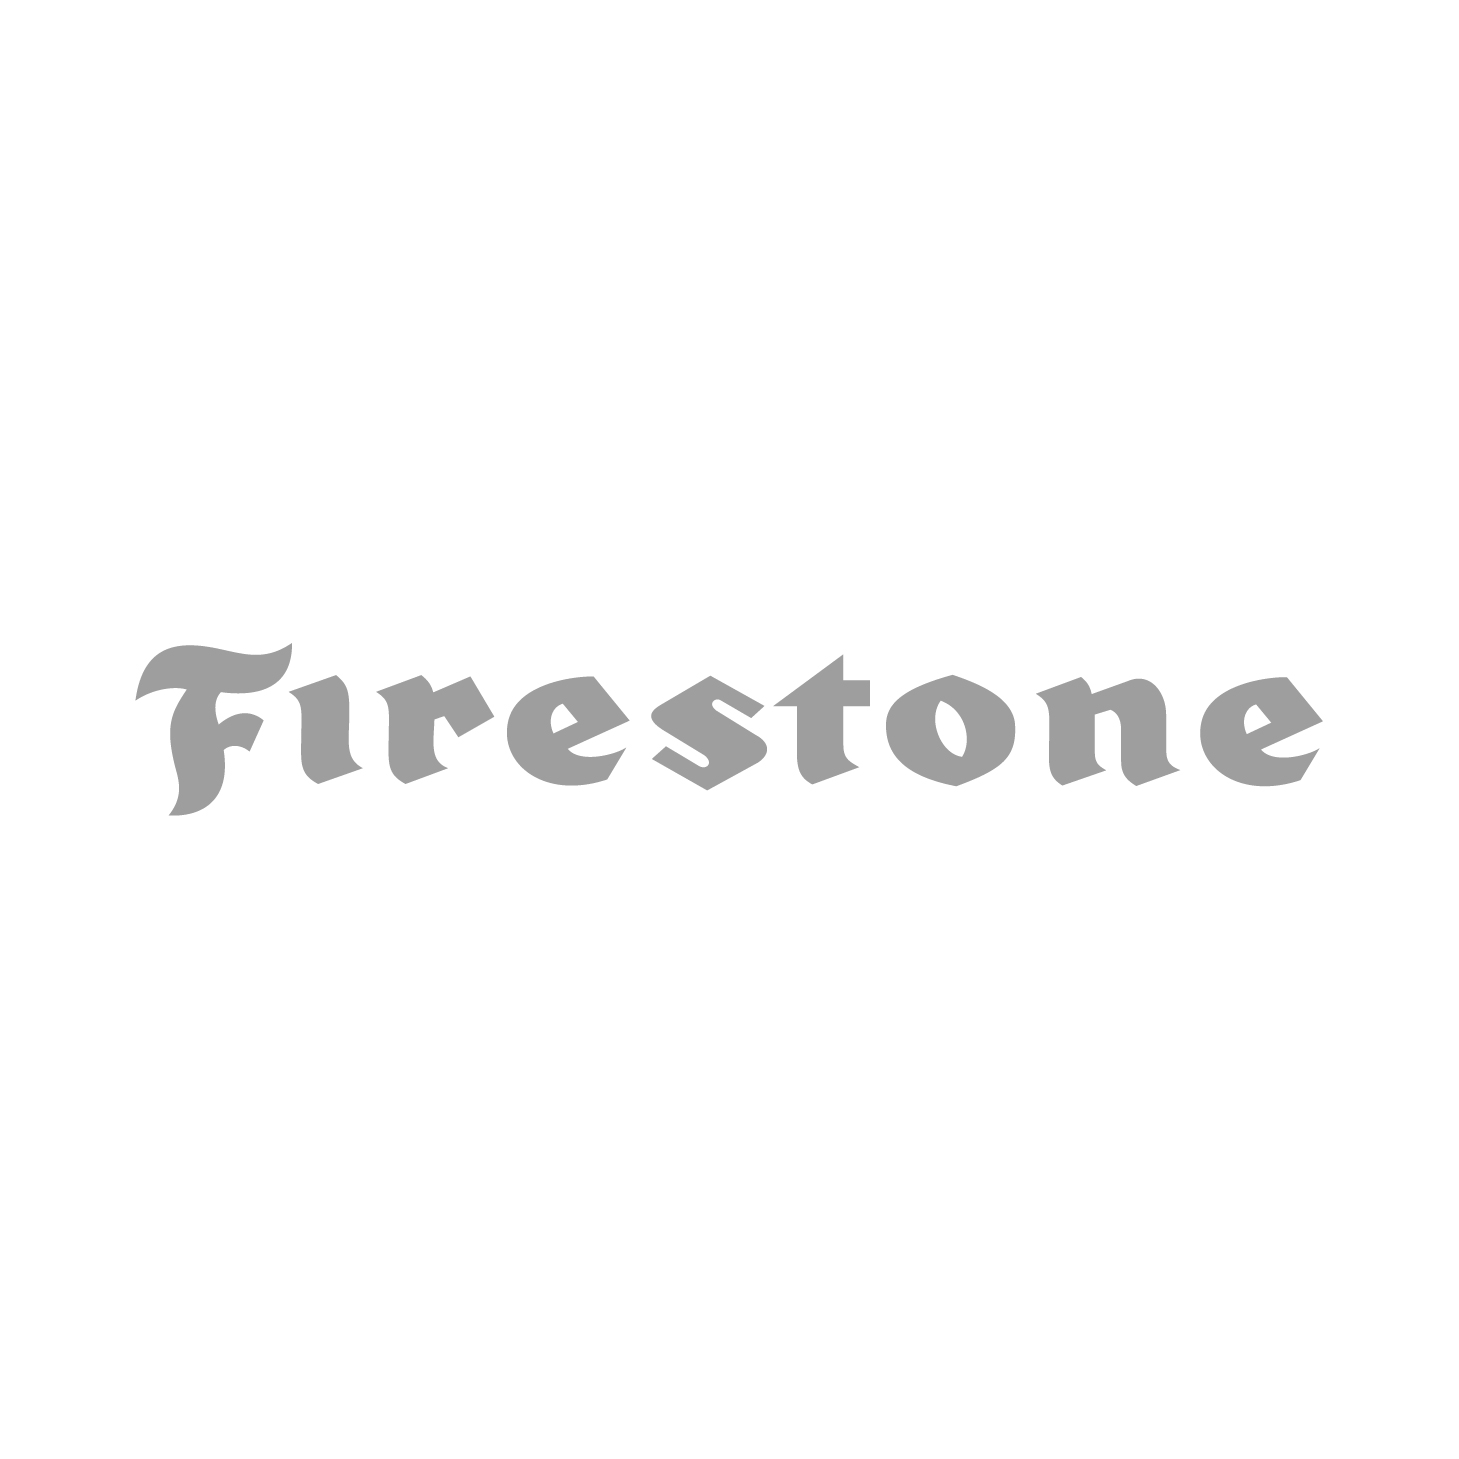 firestone-7